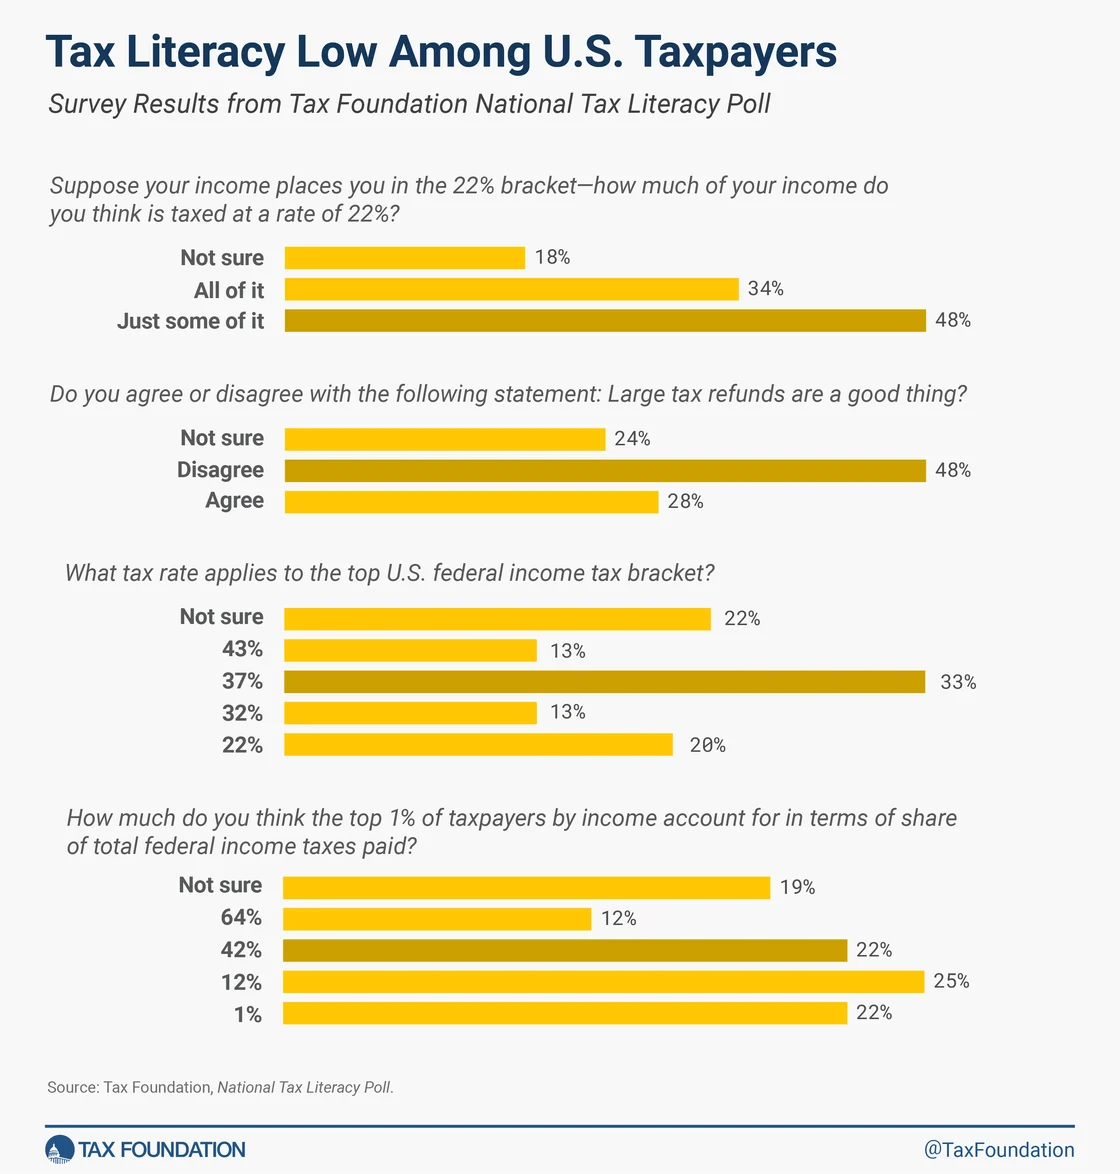 Tax Literacy Low Among U.S. Taxpayers